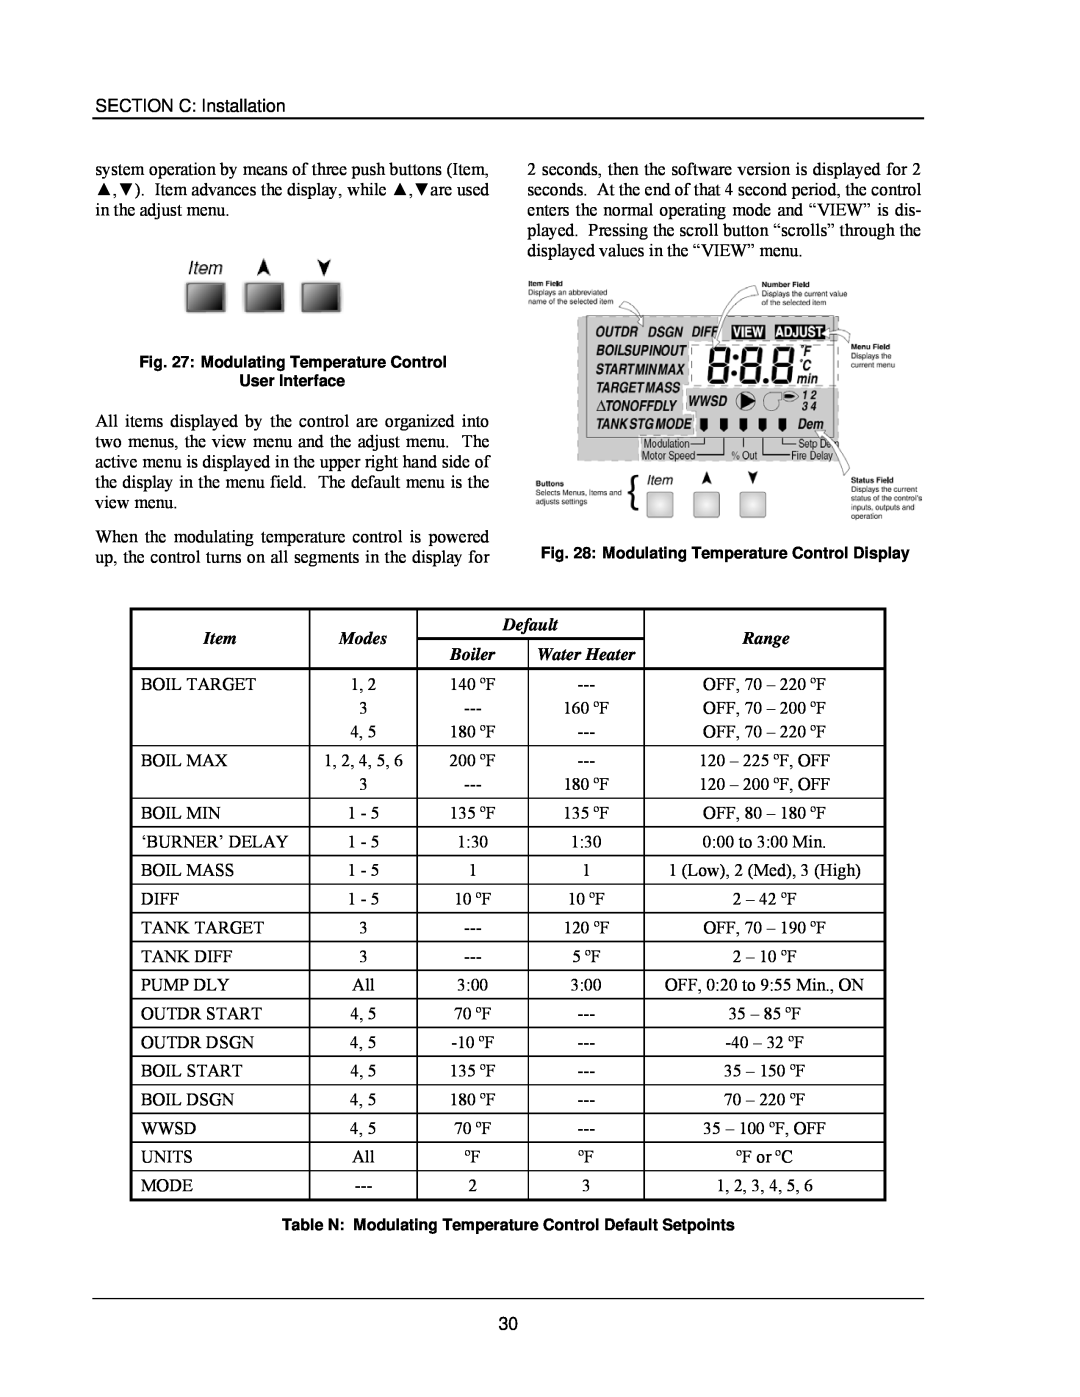 Raypak 503-2003 manual Modes, Default, Range 